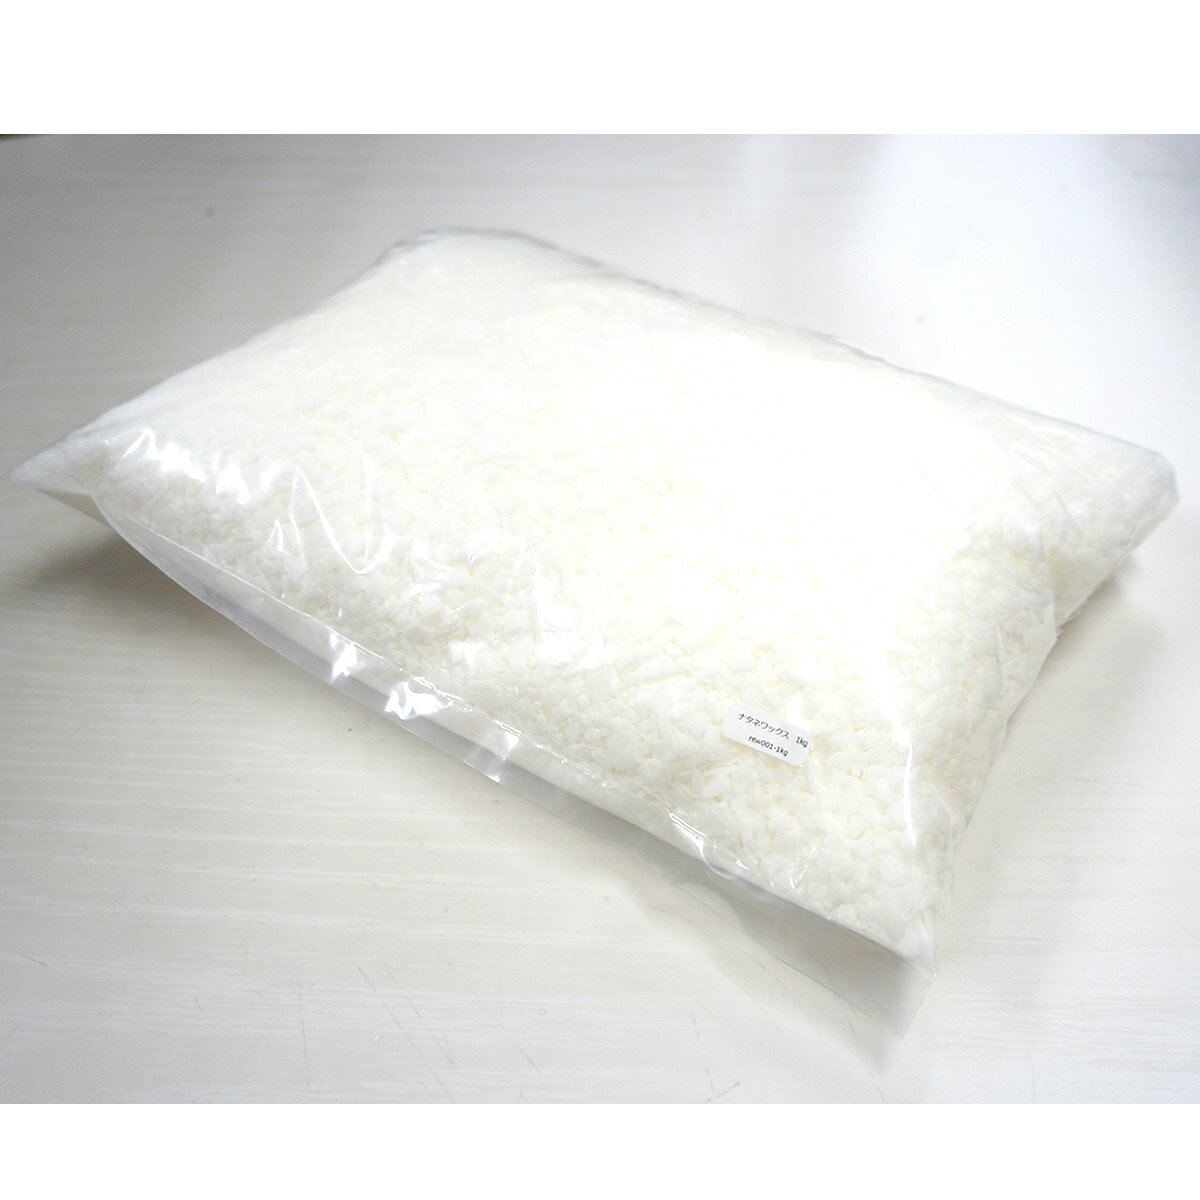 kinari/ナタネワックス 1kg/ntw001-1kg キャンドル材料 天然ワックス ナタネワックス